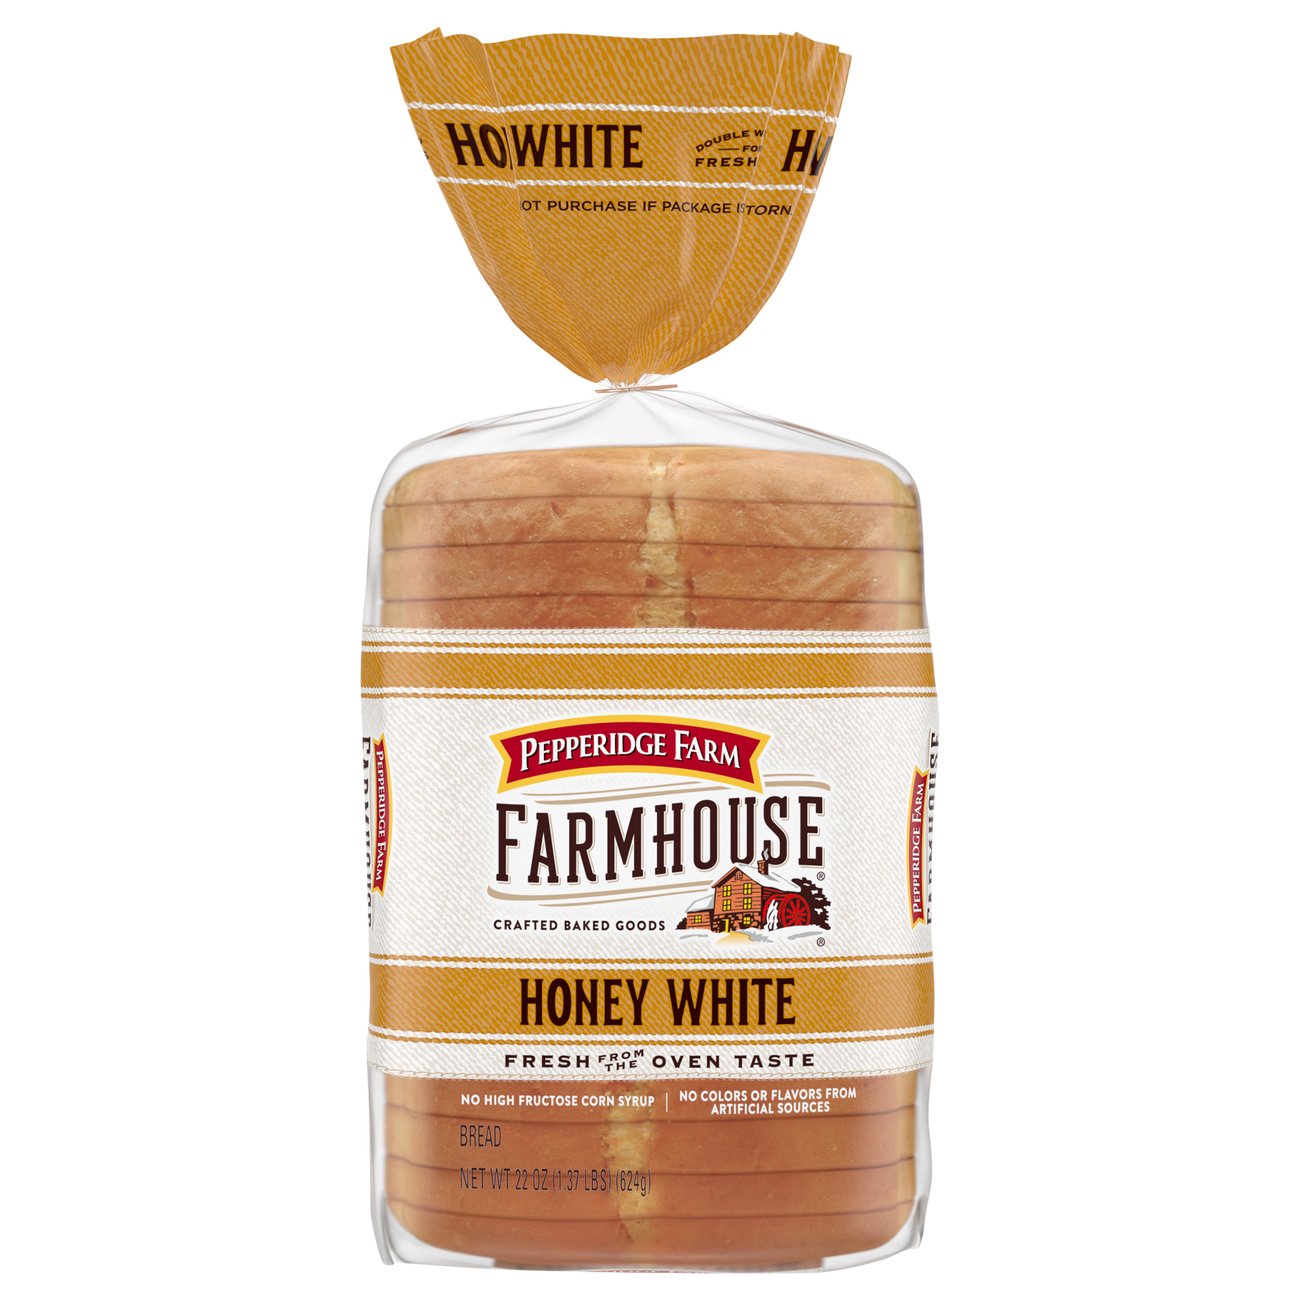 Honey Wheat Bread - Pepperidge Farm